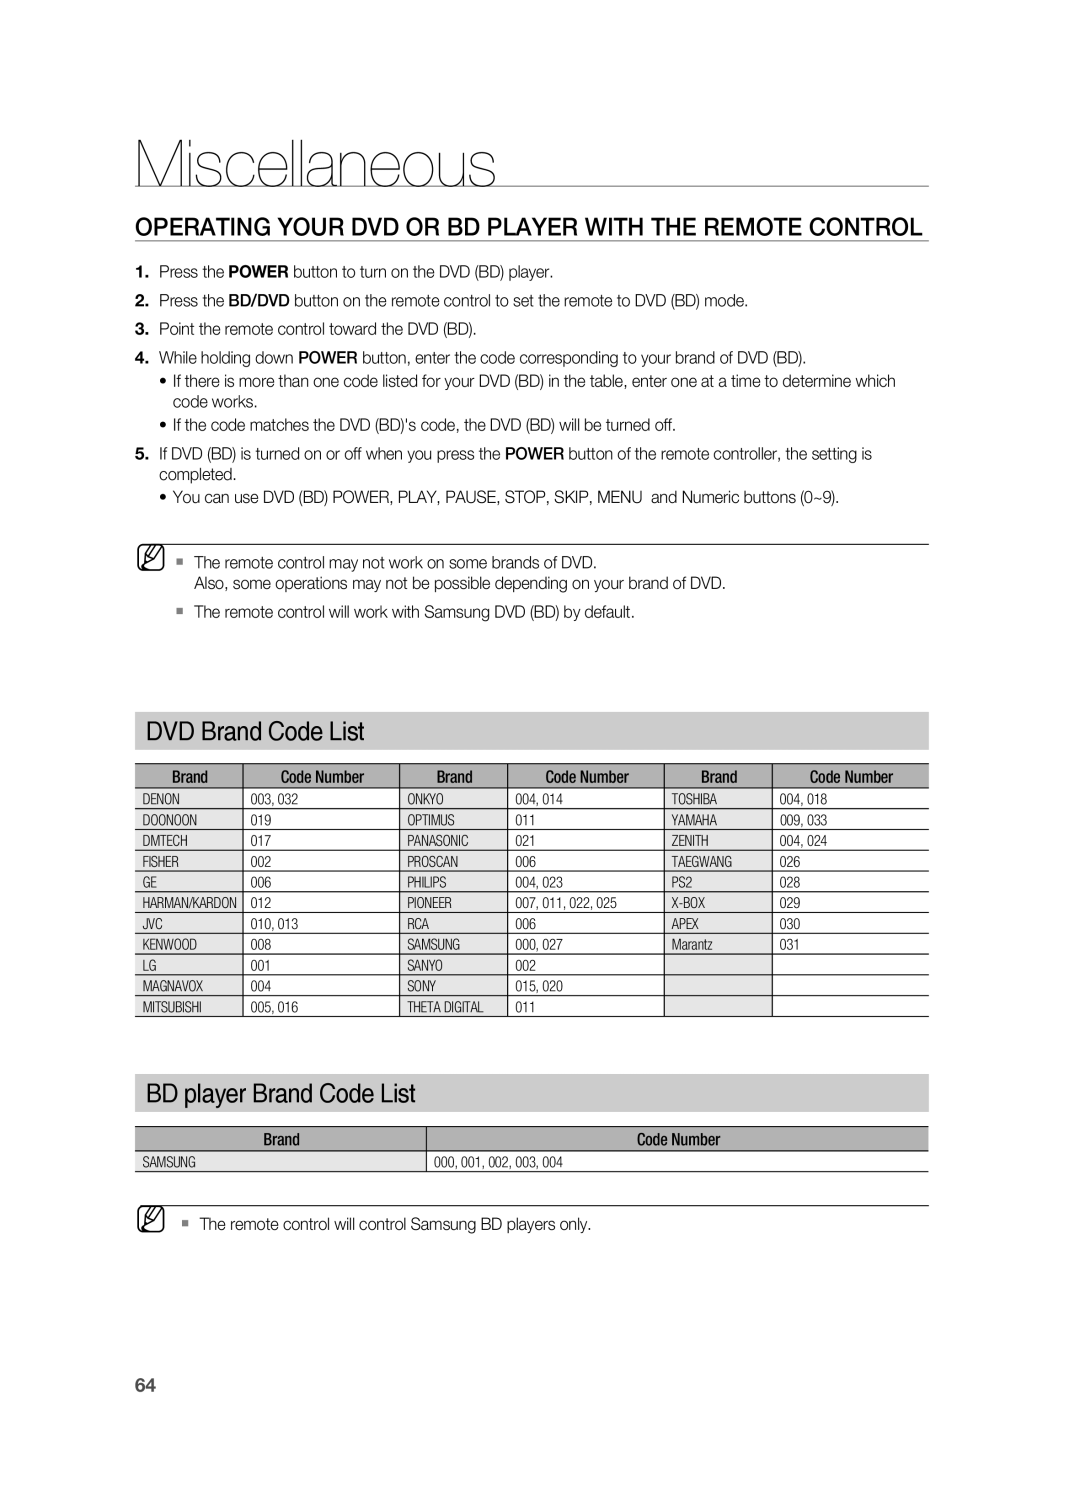 Samsung HW-C900-XAA user manual DVD Brand Code List, BD player Brand Code List, Miscellaneous 